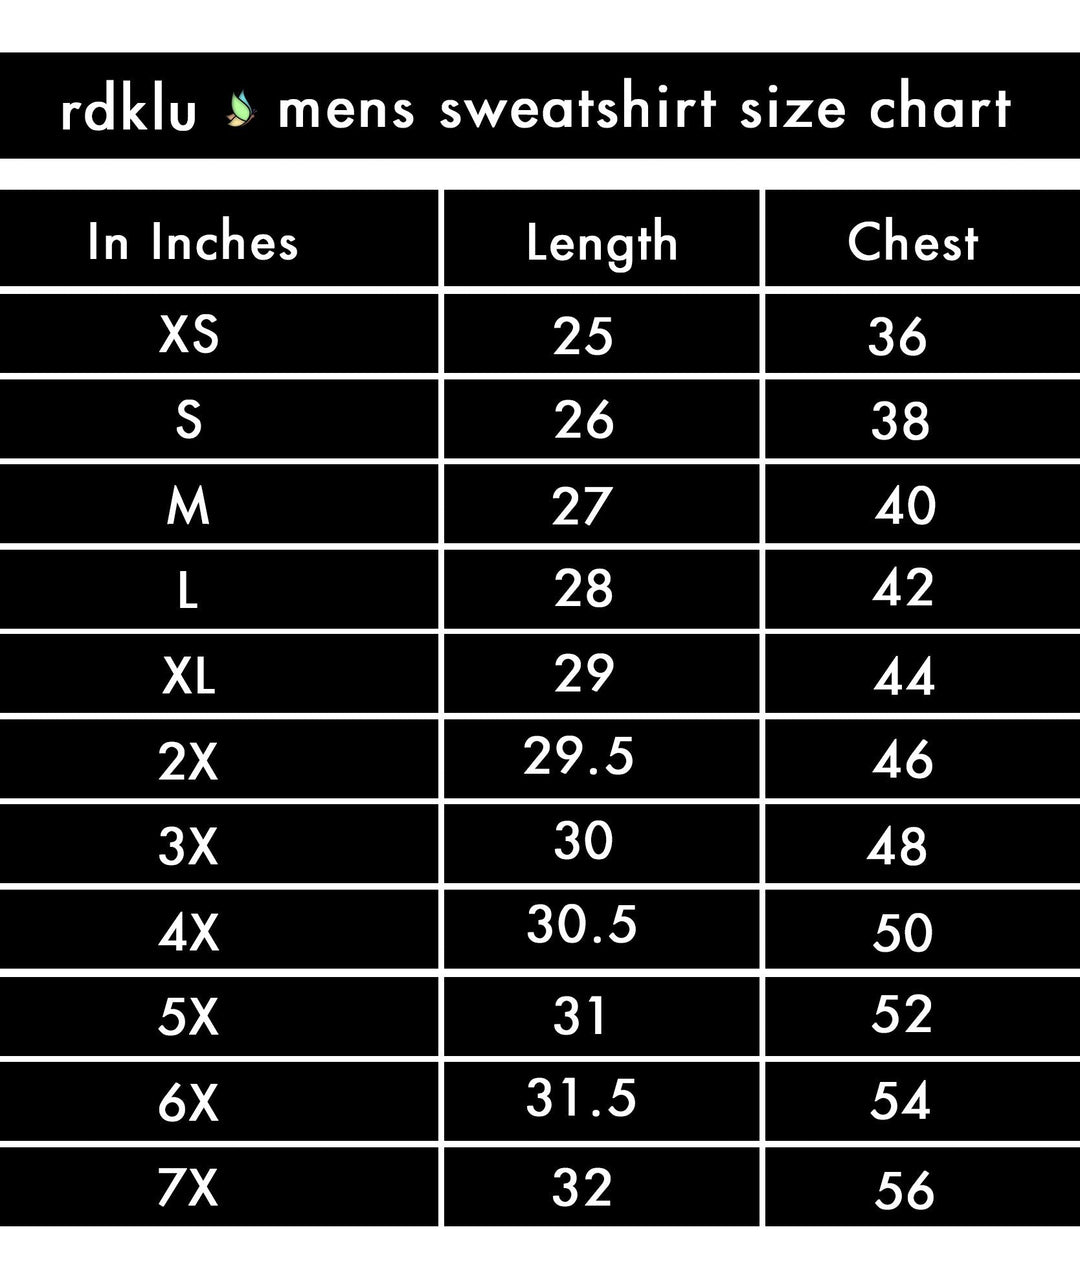 RDKLU MENS SWEATSHIRT - RDKL - Men's Sweatshirt#128